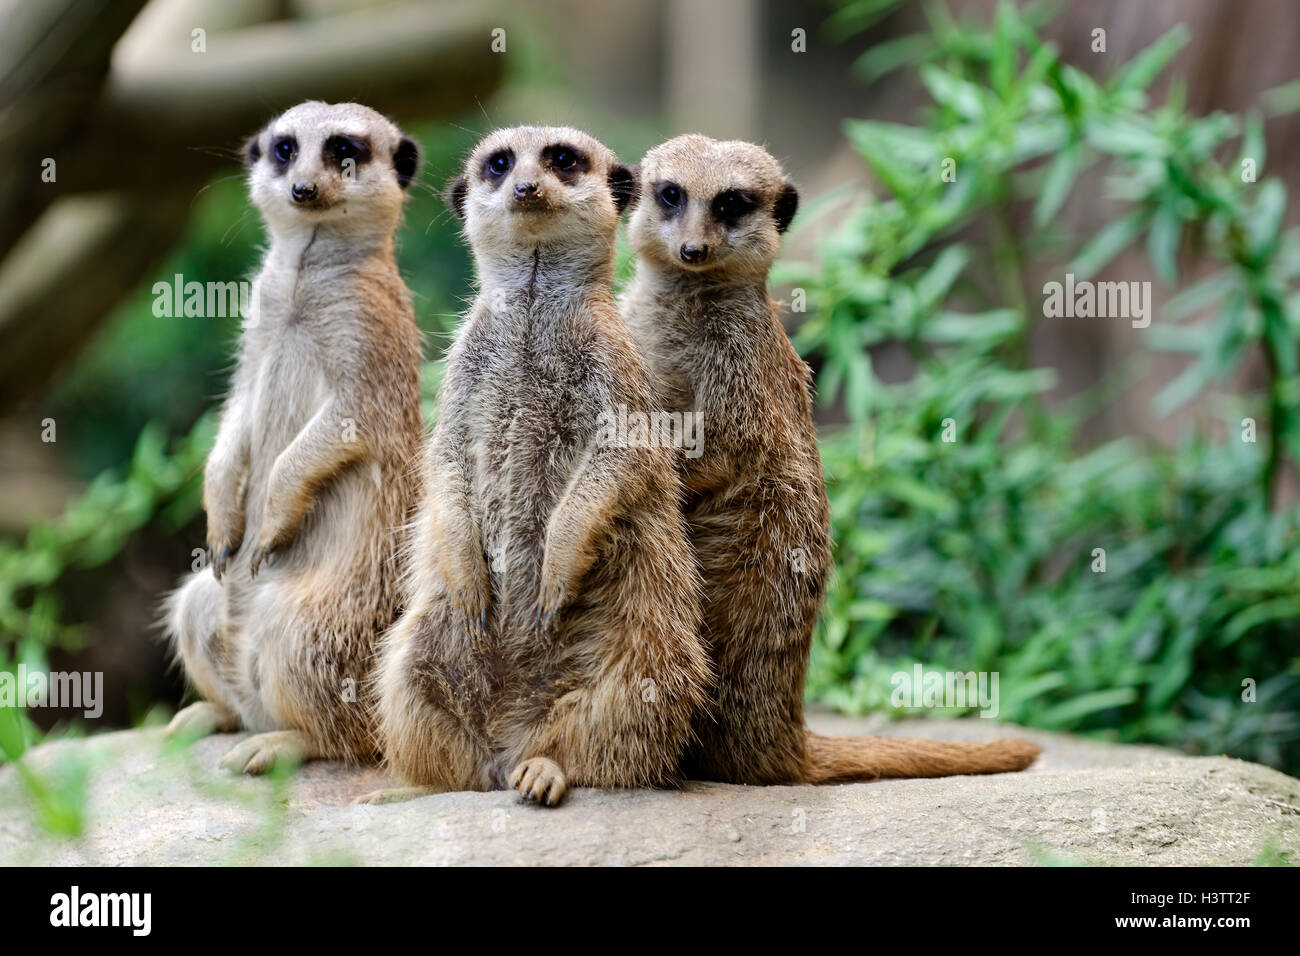 Three Meerkats (Suricata suricatta), standing attentively, Occurrence Africa, captive Stock Photo